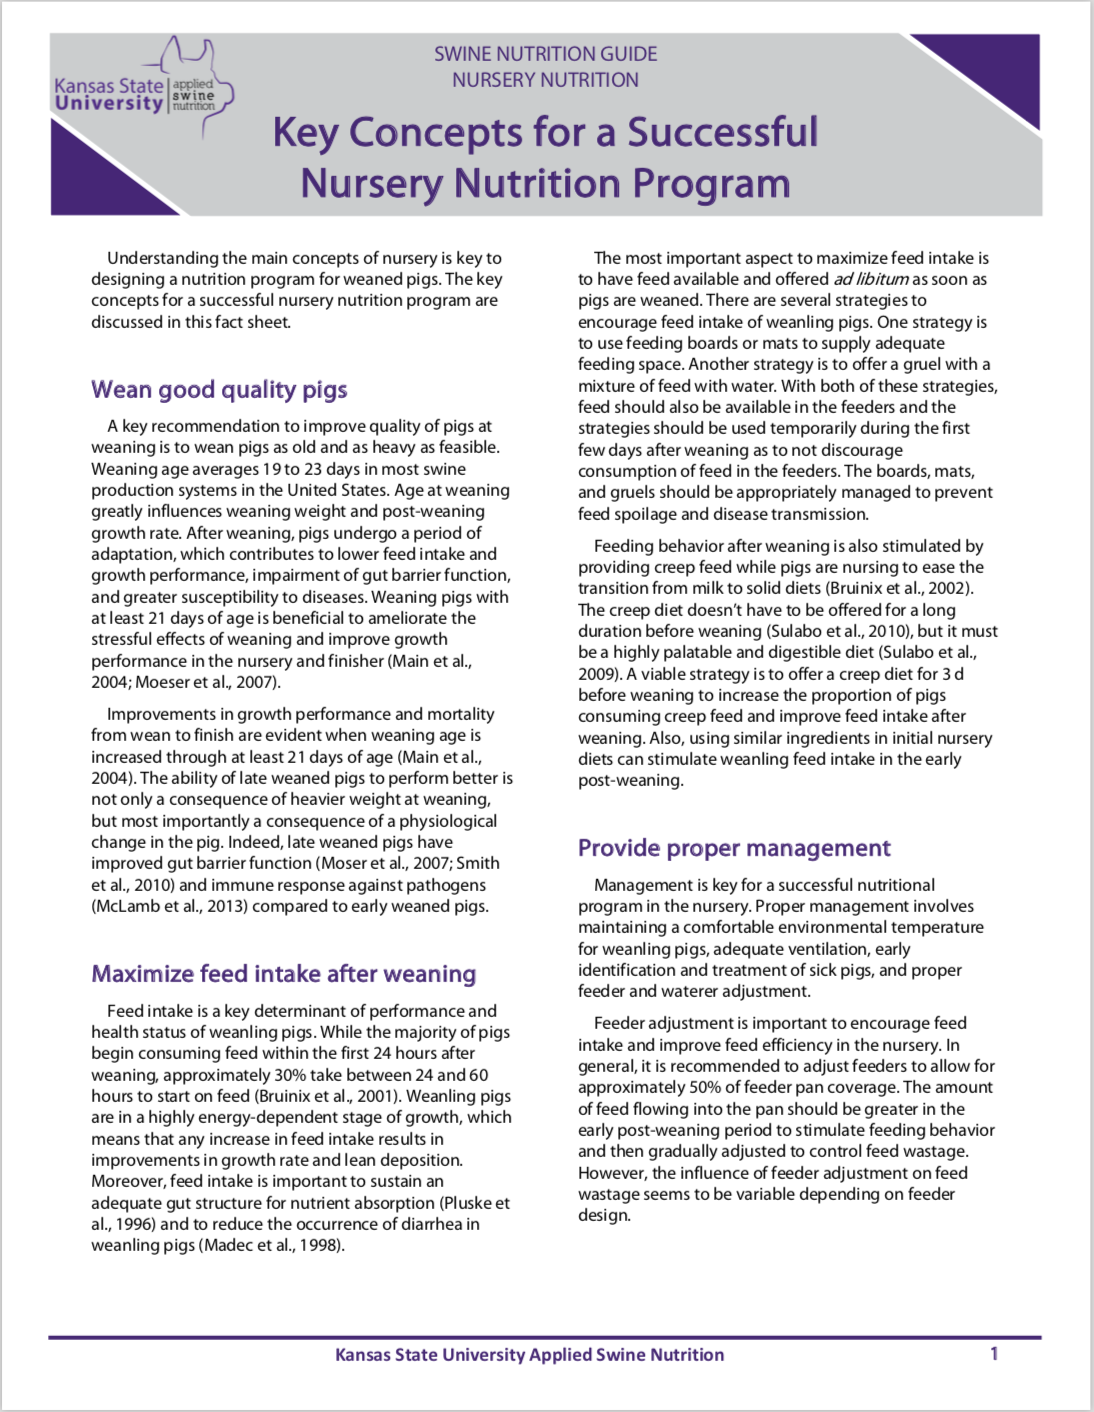 Key concepts in nursery nutrition